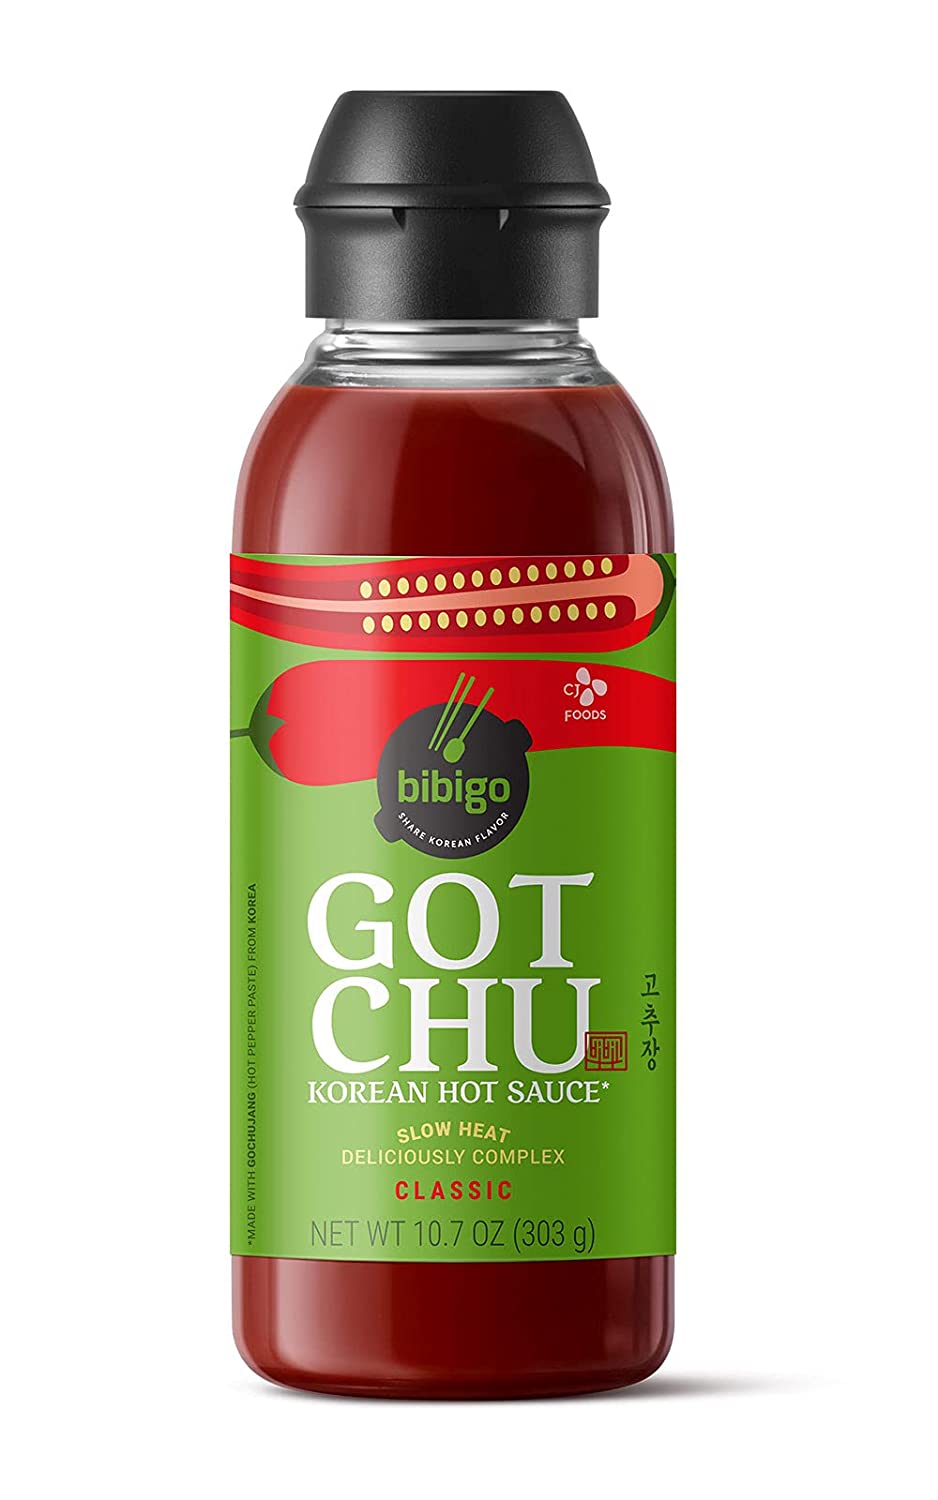 10.7-Oz bibigo GOTCHU Korean Hot Sauce (Classic) $2.83 w/ S&S + Free Shipping w/ Prime or $25+